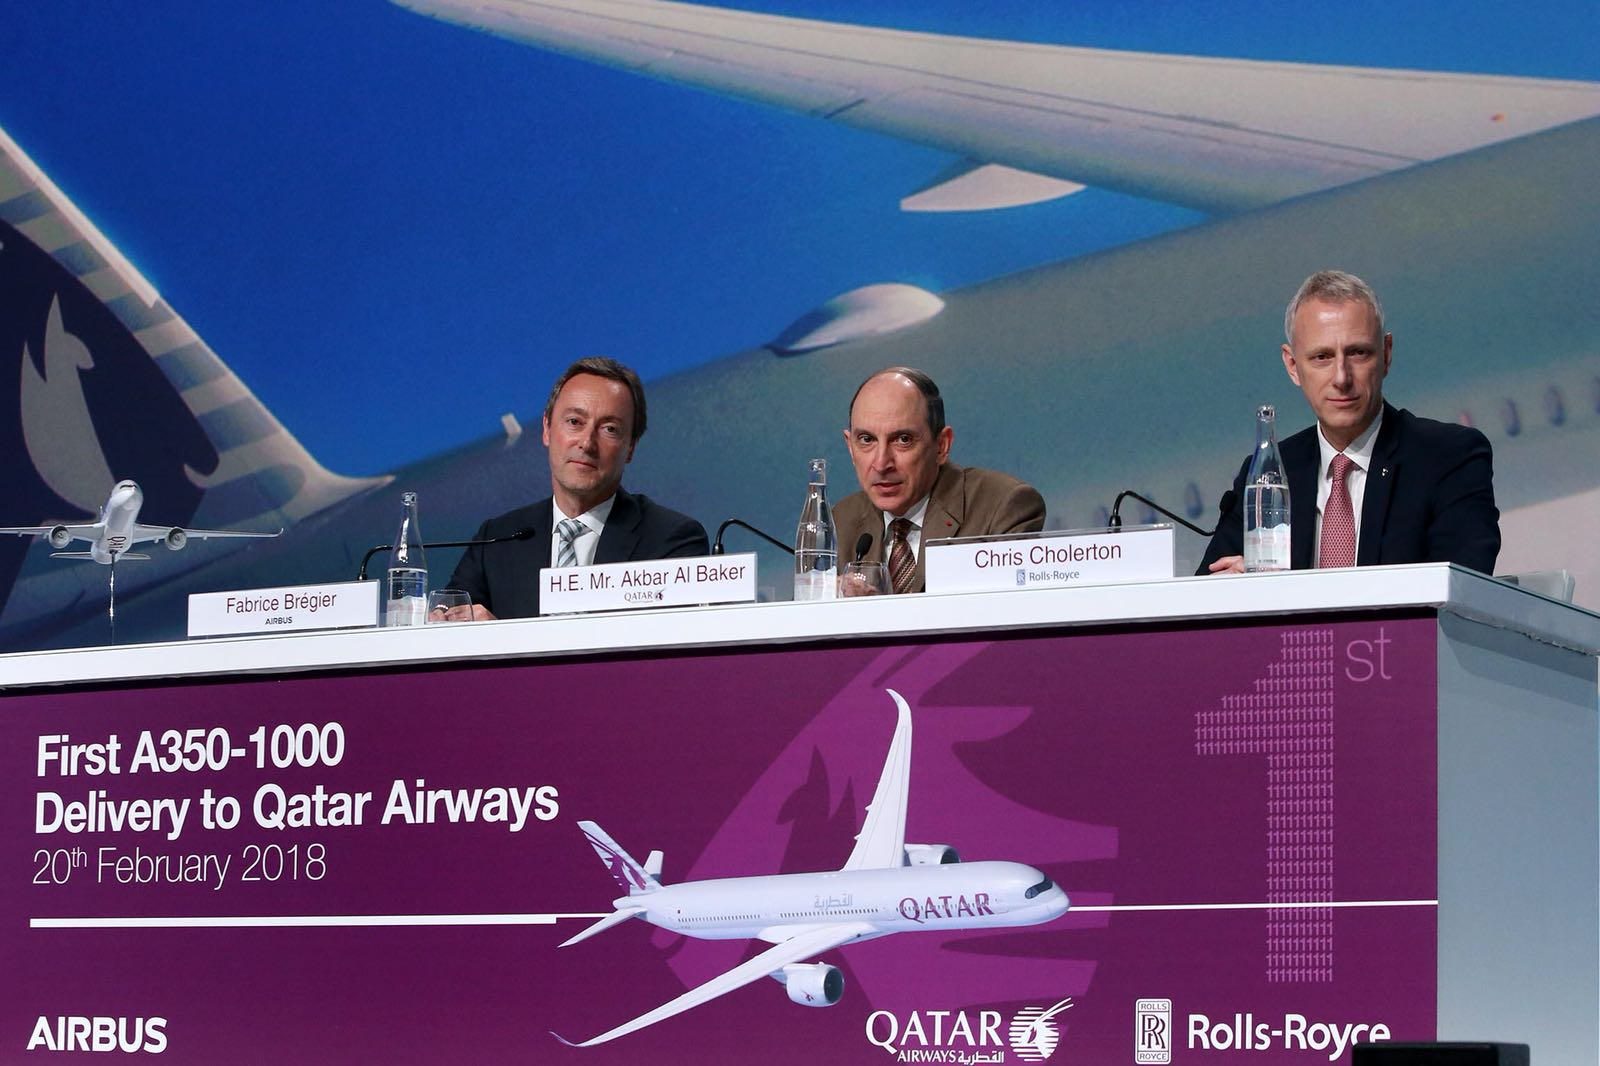 Oh My: Qatar Airways chief executive, Akbar Al Baker throws major shade at Gulf rivals in Saudia Arabia and UAE over continuing political rift, blockade